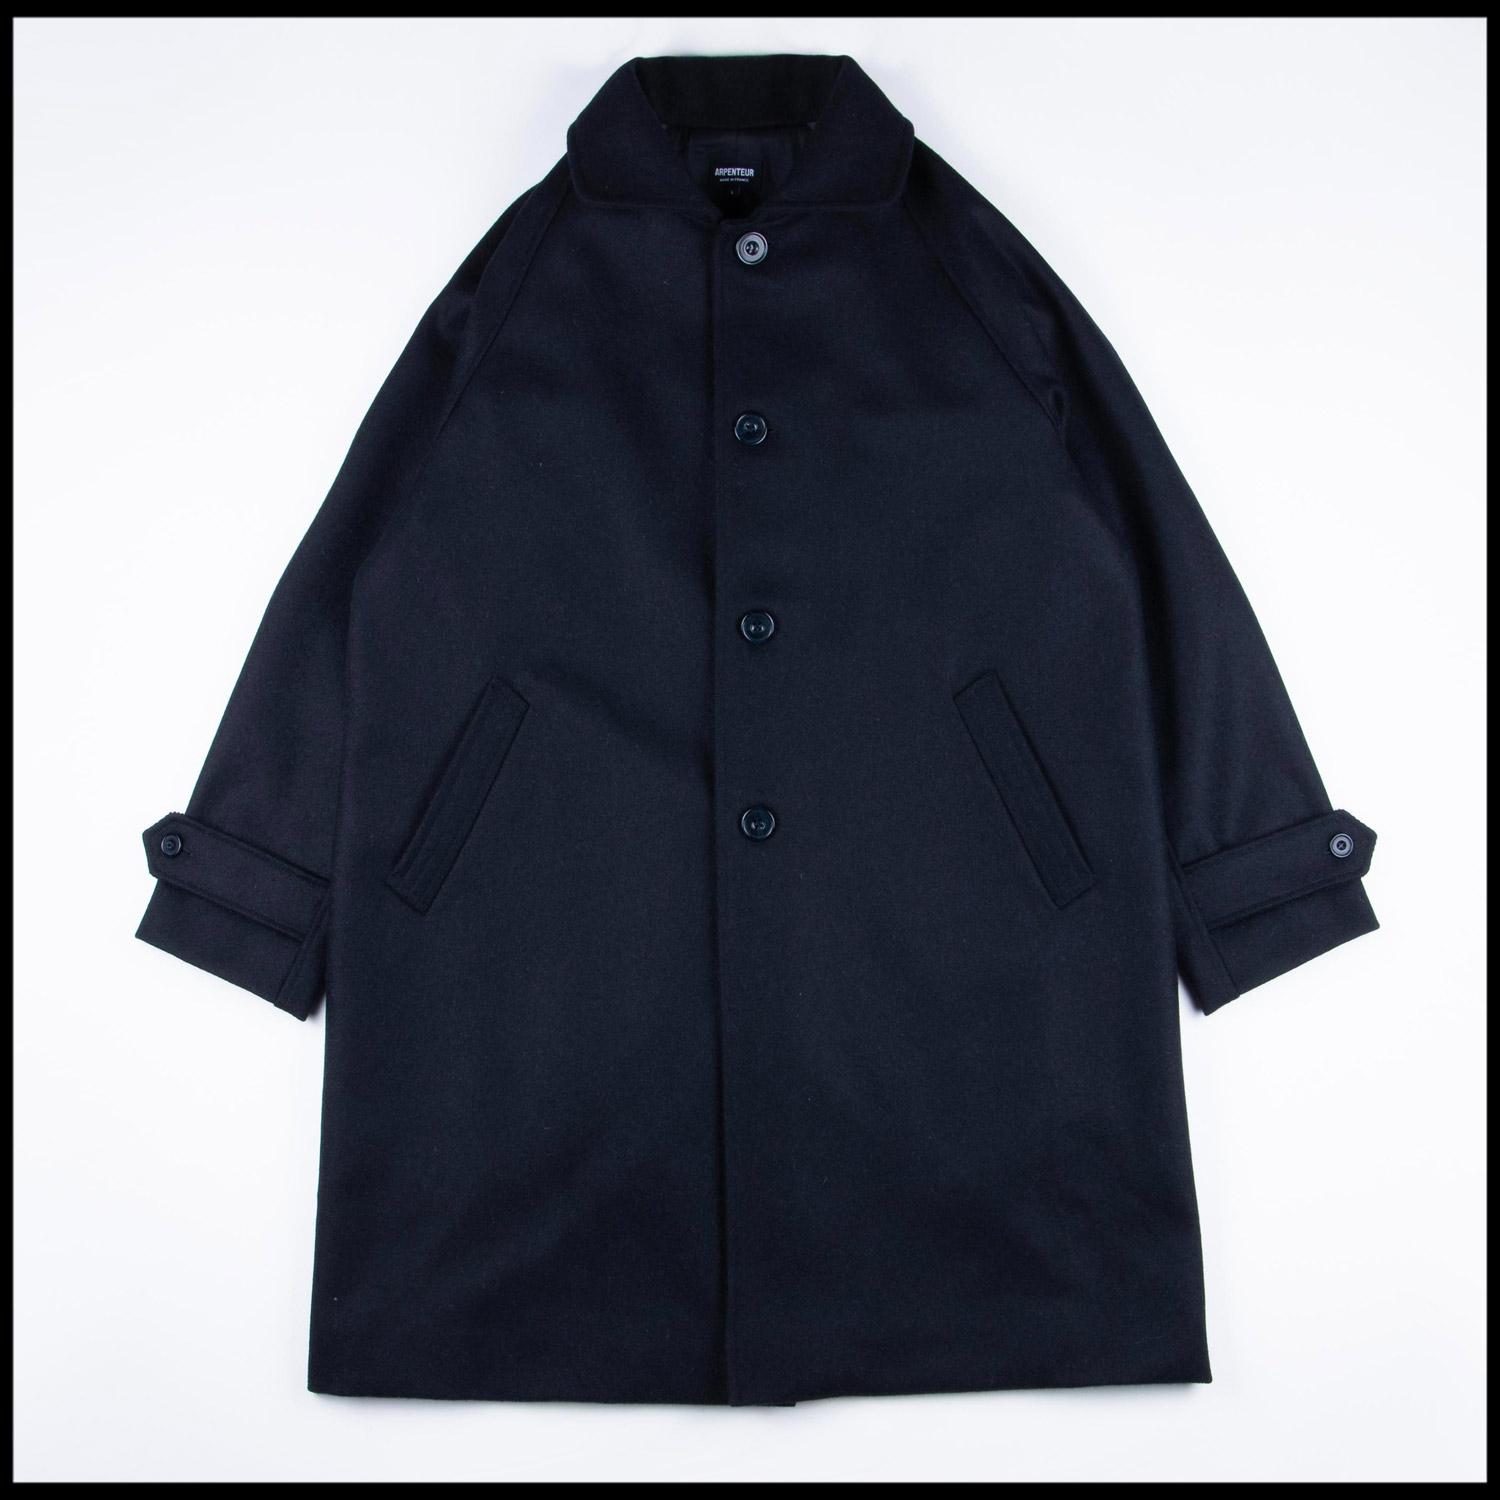 UTILE coat in Navy color by Arpenteur